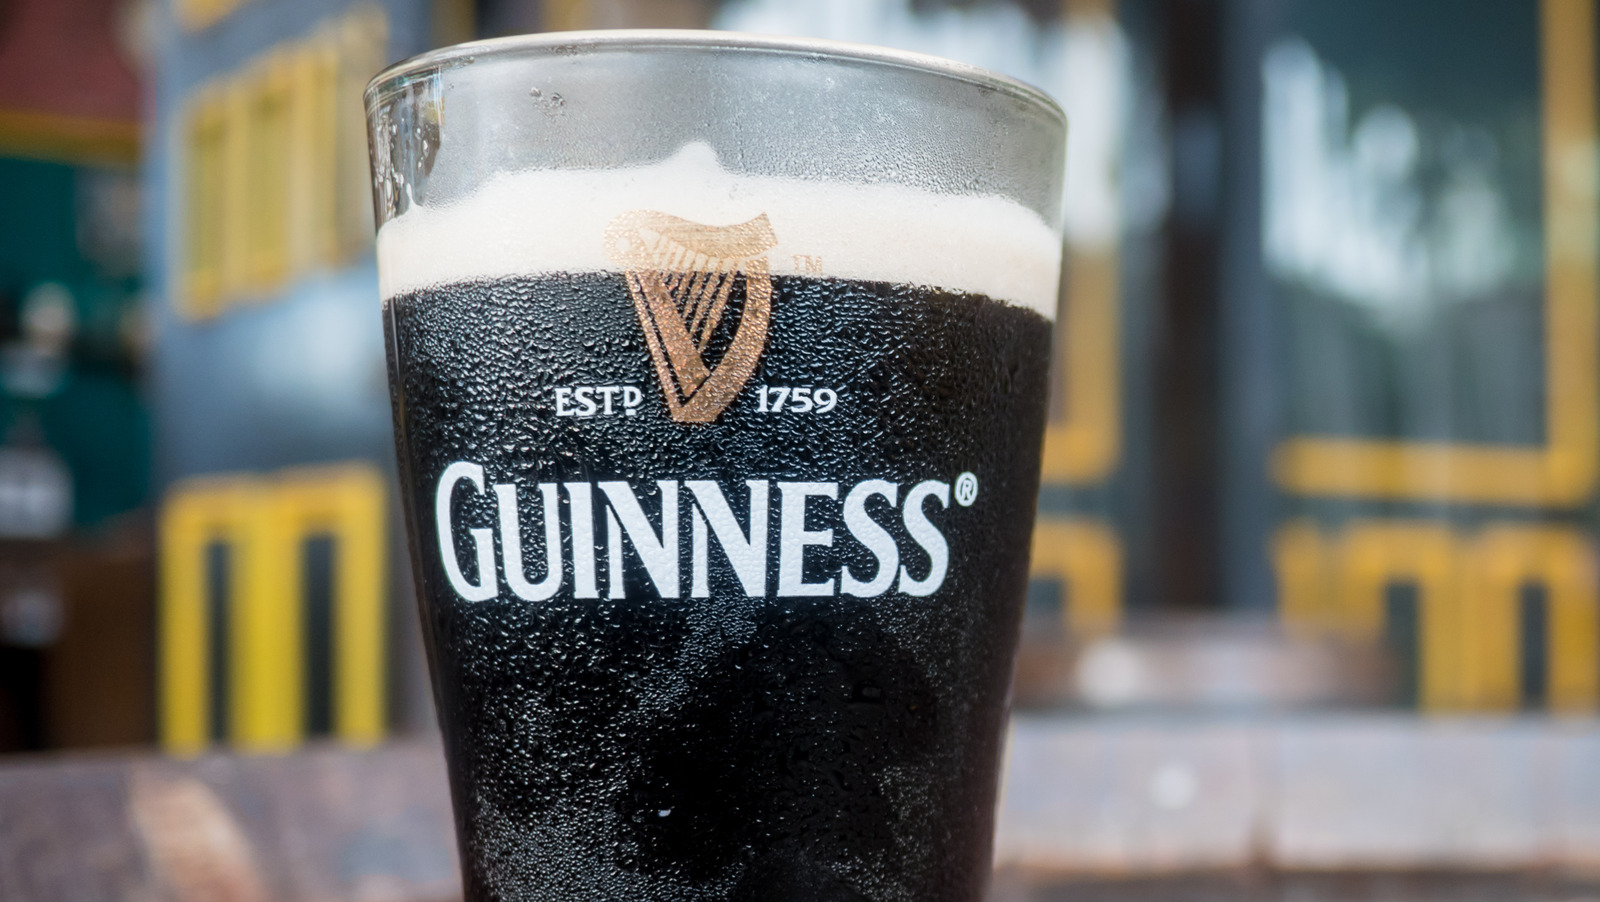 Guinness Beer Pint Glass Ireland Harp Logo Brewed In Dublin